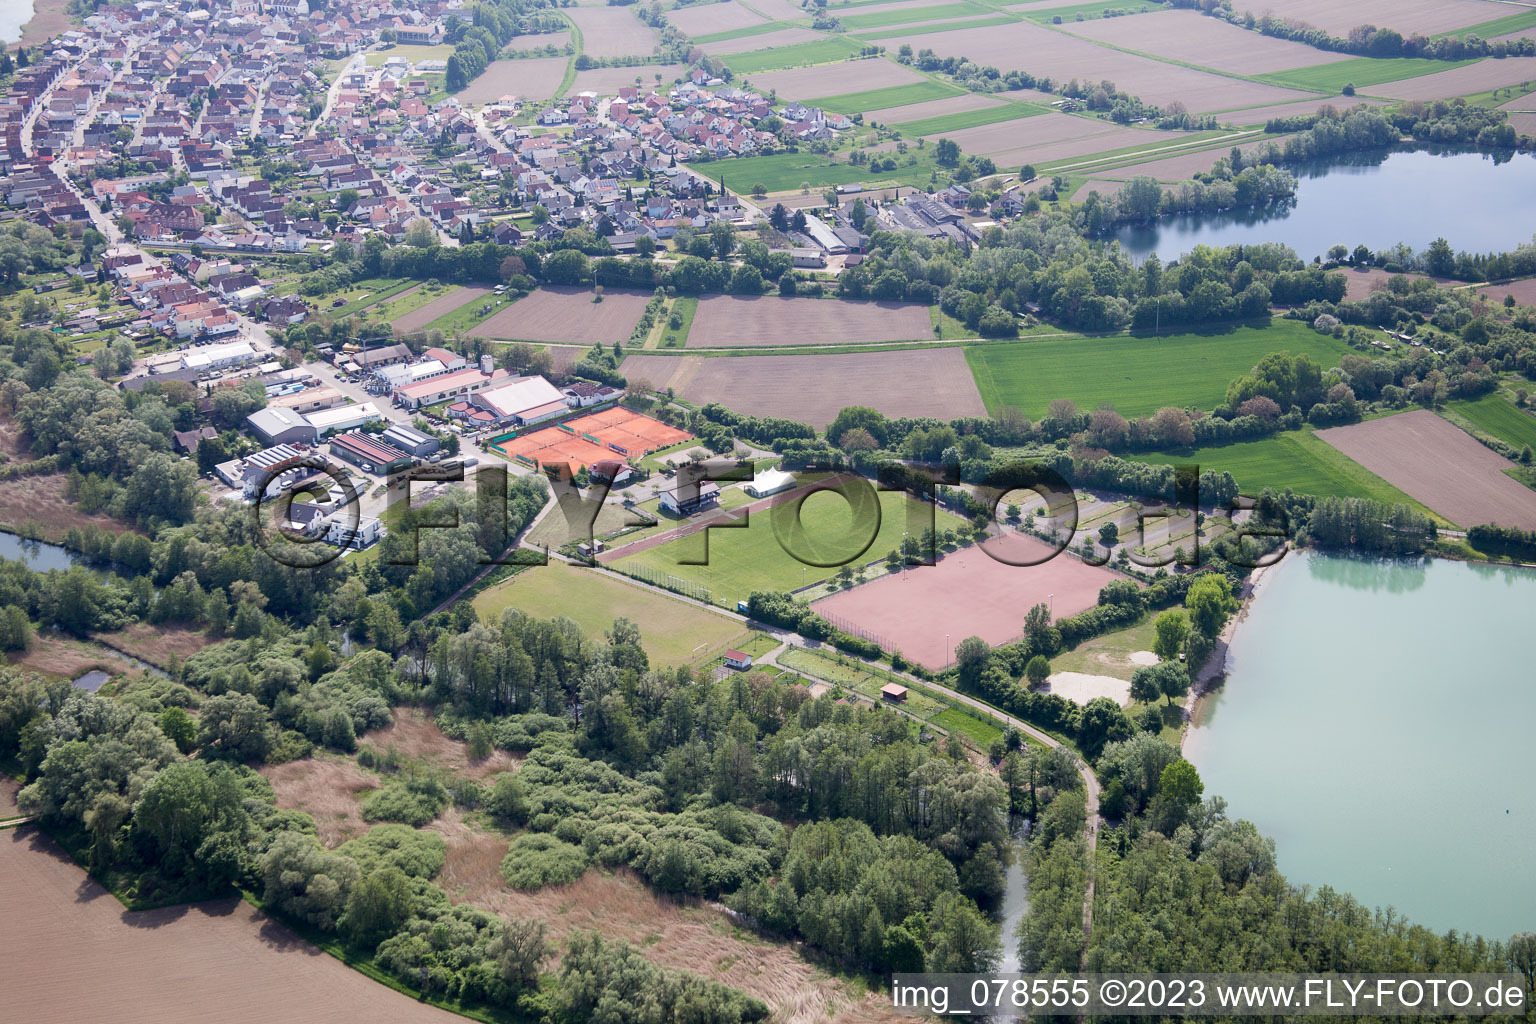 Drone recording of Neuburg in the state Rhineland-Palatinate, Germany